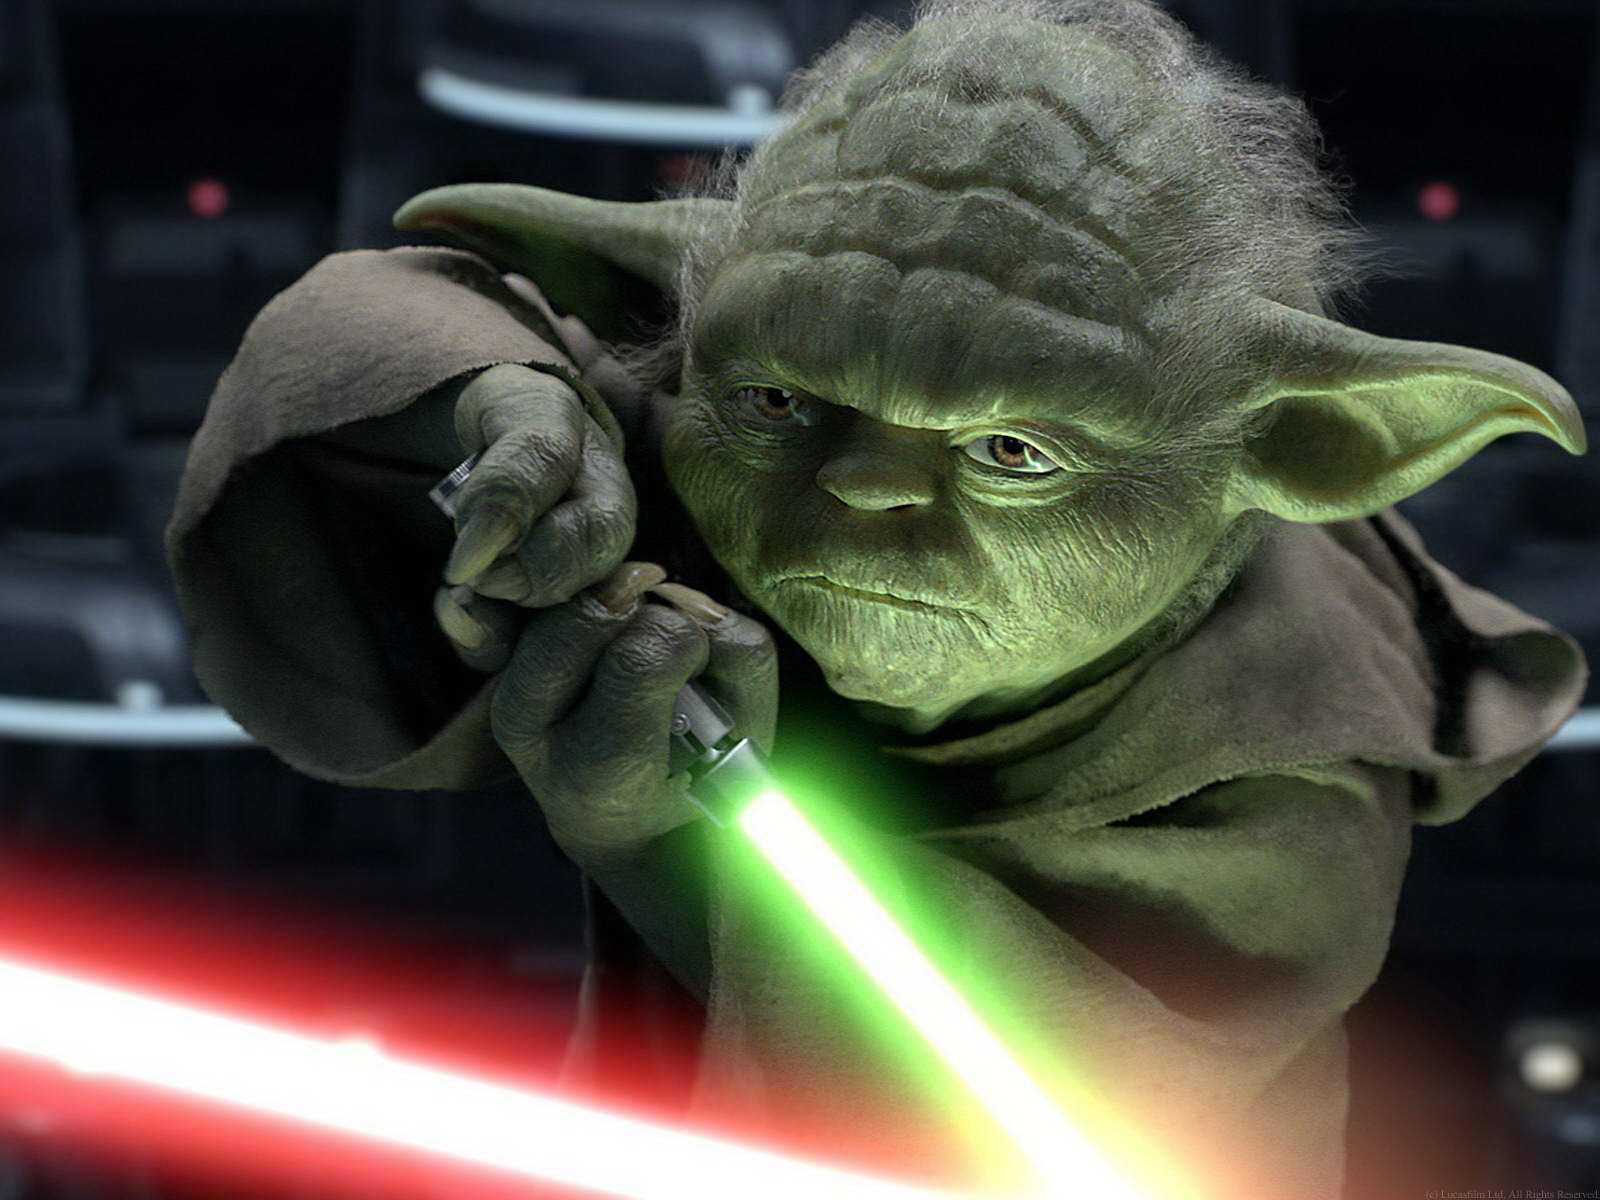 Yoda battling Palpatine in the Senate chamber.